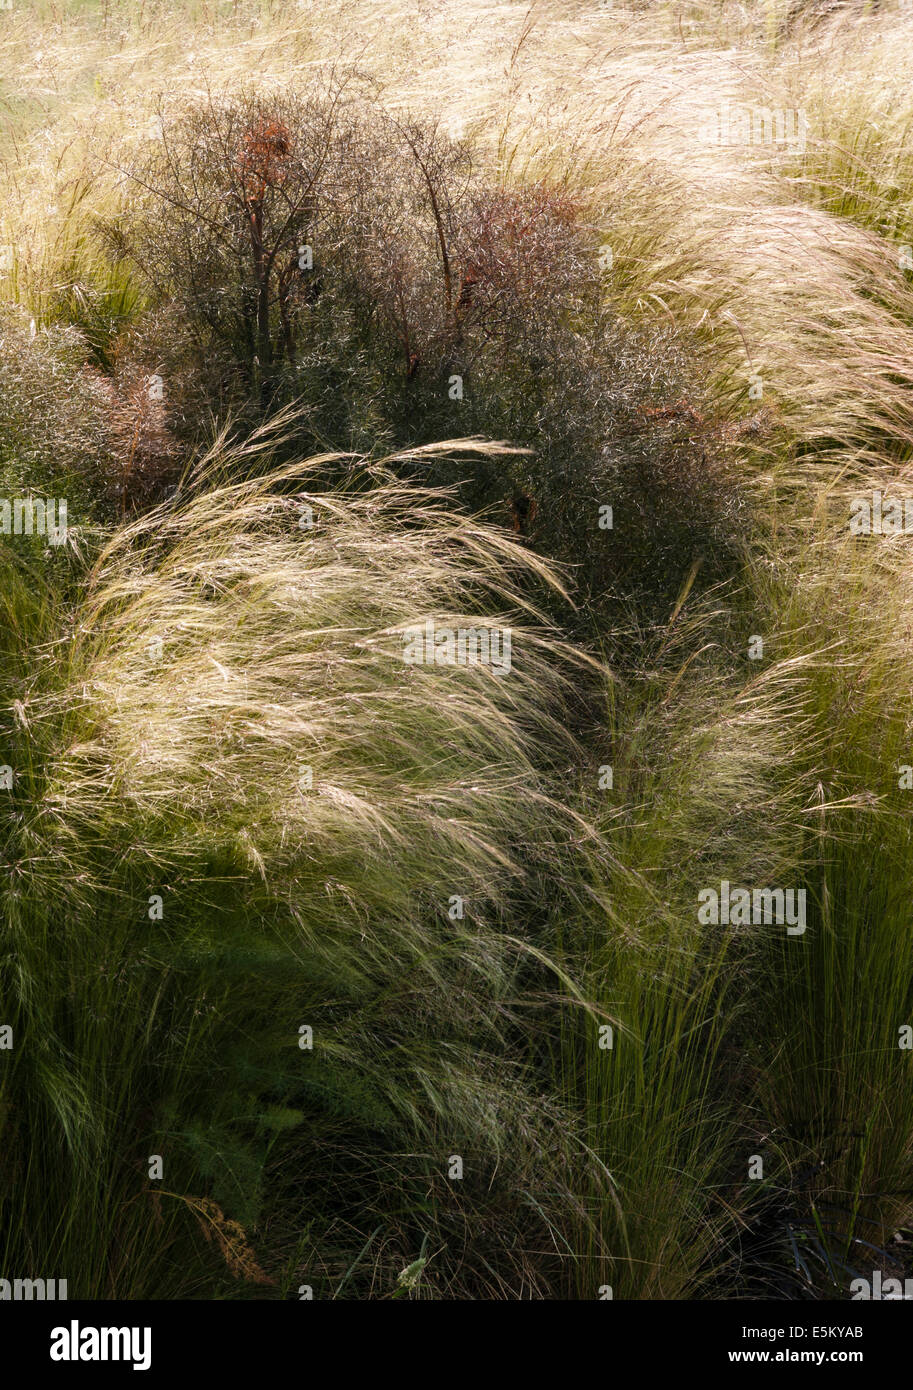 Feather grass (stipa tenuissima) and bronze fennel (foeniculum vulgare purpurascens) Stock Photo